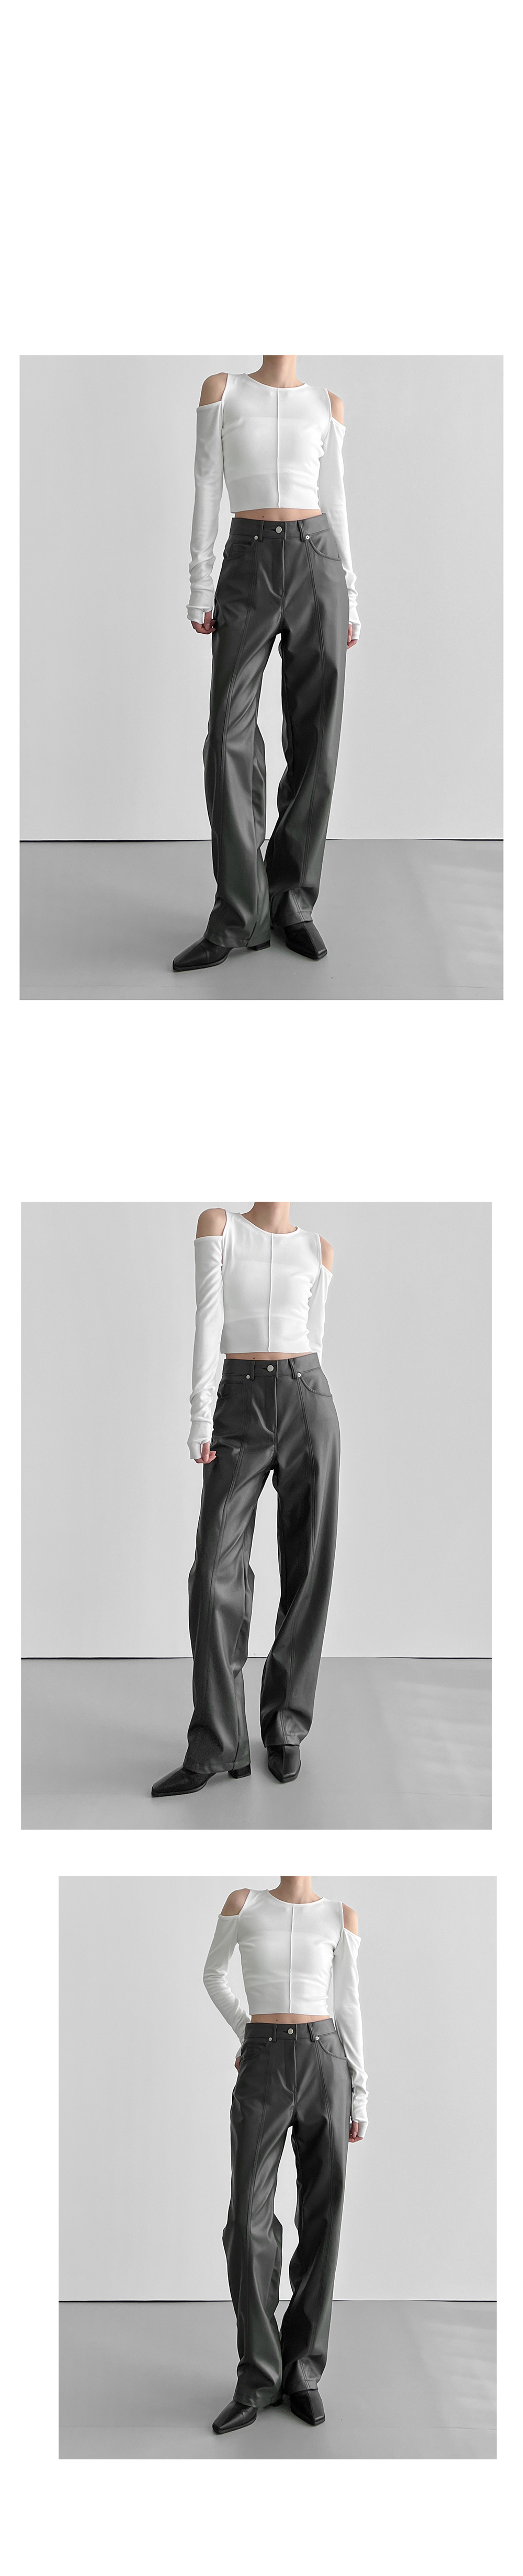 suspenders skirt/pants grey color image-S1L10